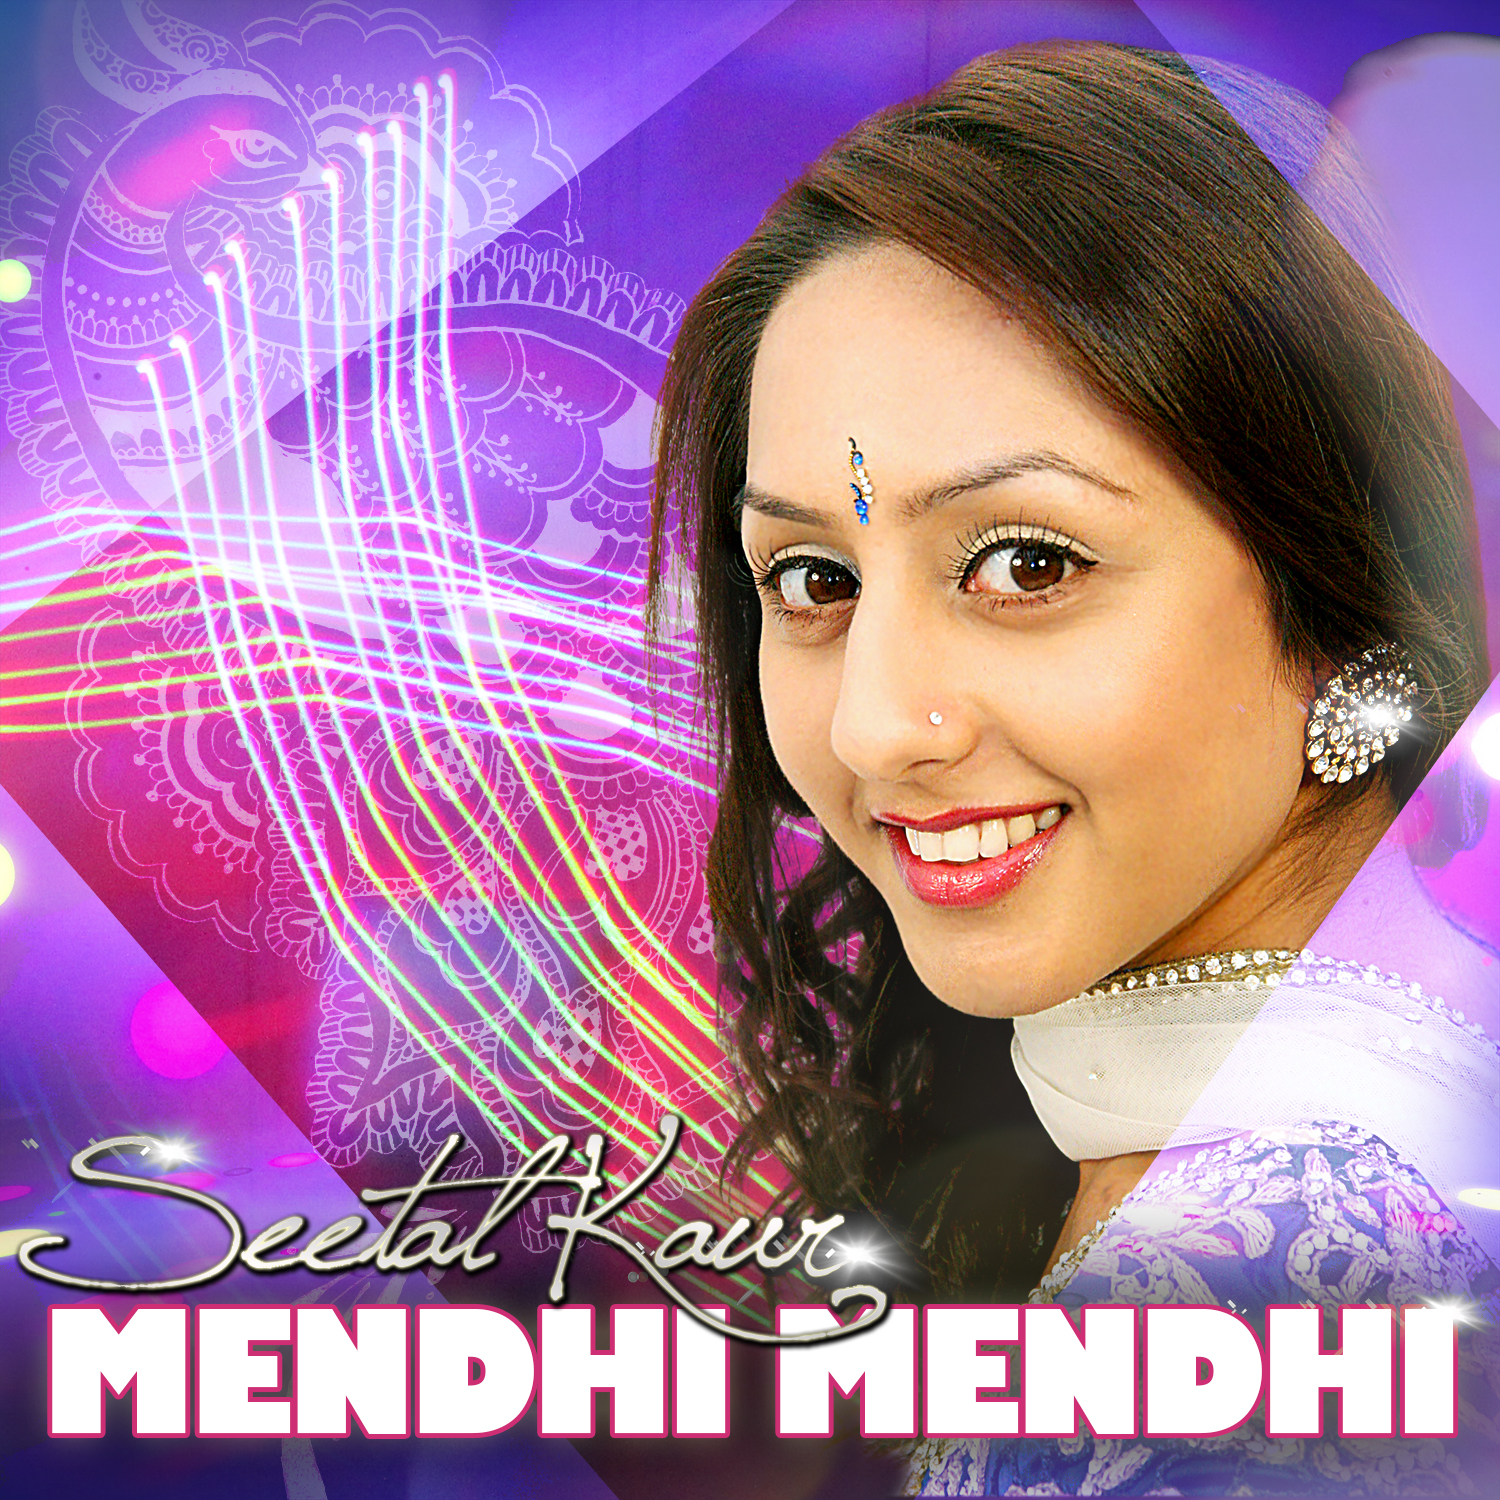 Photo of Seetal Kaur – Mendhi Mendhi (Full Video)